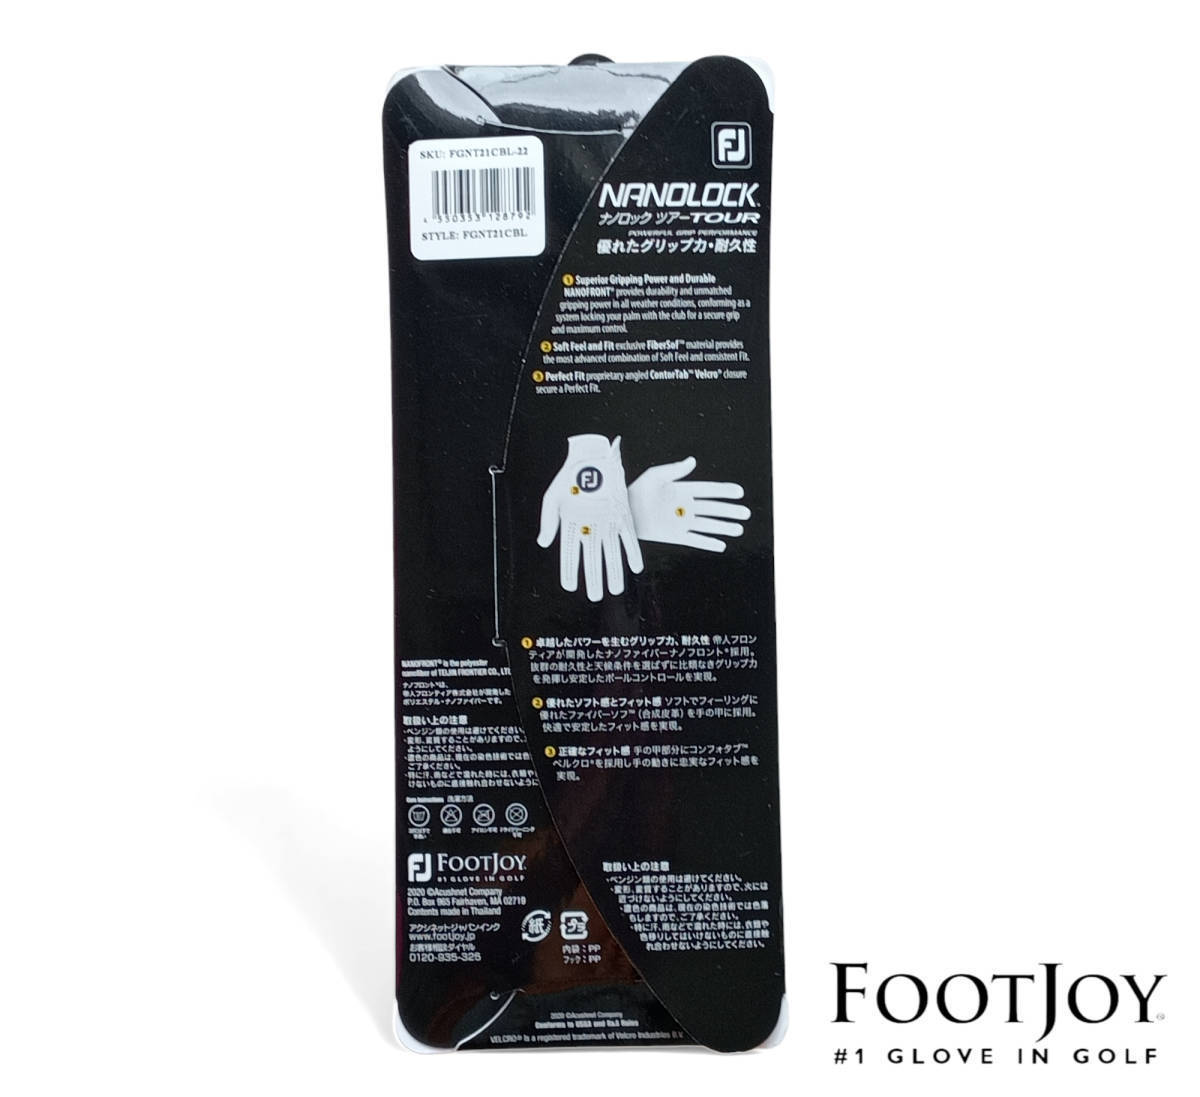 Fj nano lock Tour 25cm duck pattern . white. 2 pieces set foot Joy Golf glove NANOLOCK TOUR new goods unused 